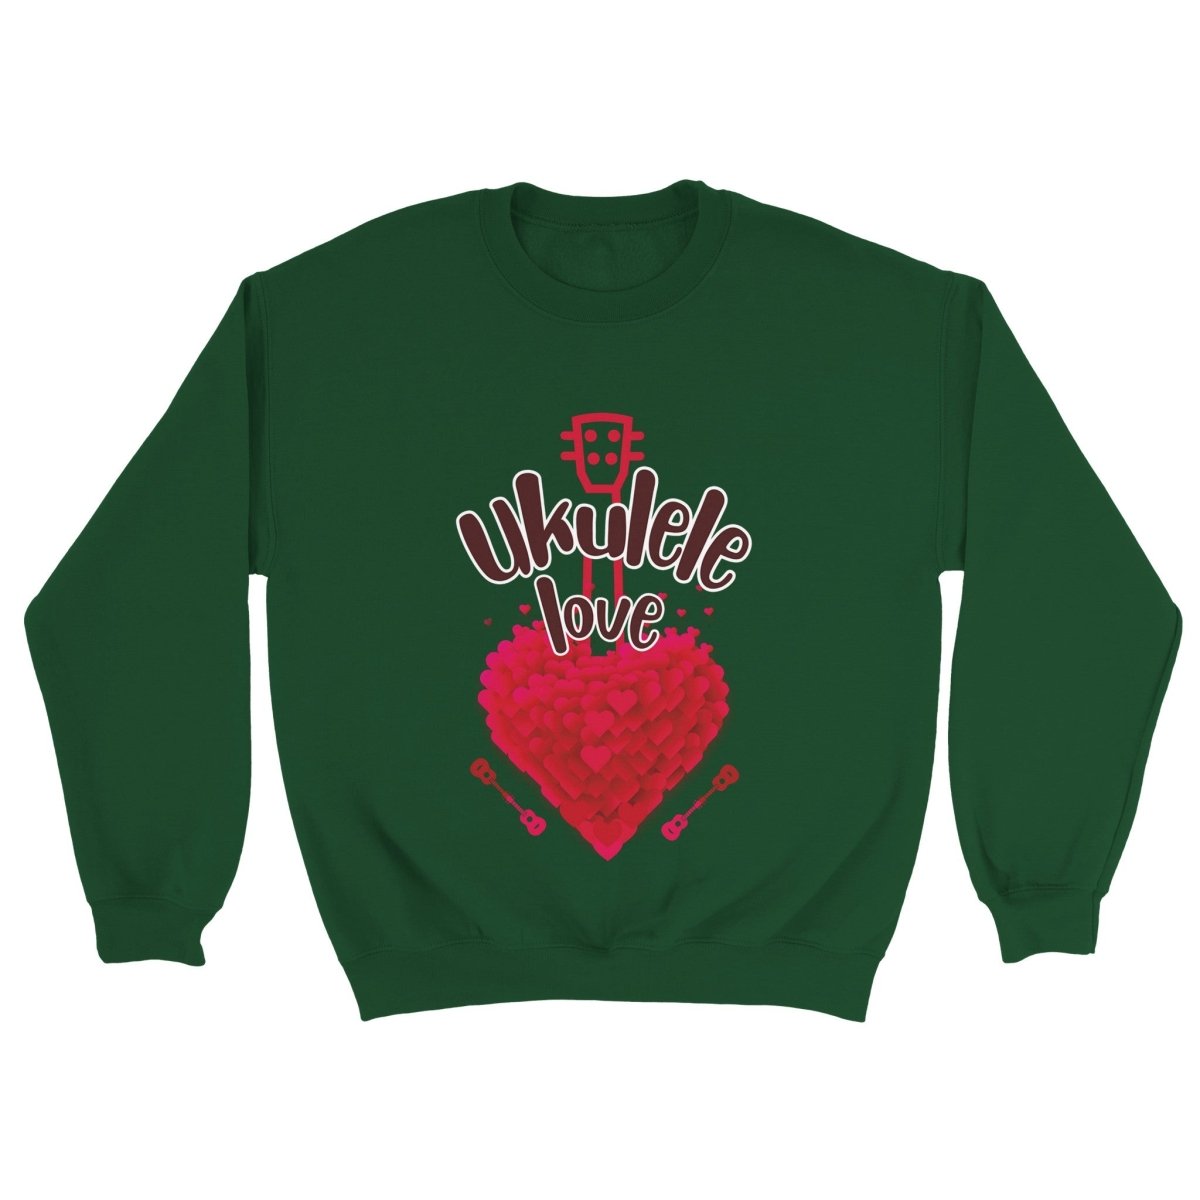 Classic 'Uke Love' Unisex Crewneck Sweatshirt - Uke Tastic - S - Free Delivery - Uke Tastic